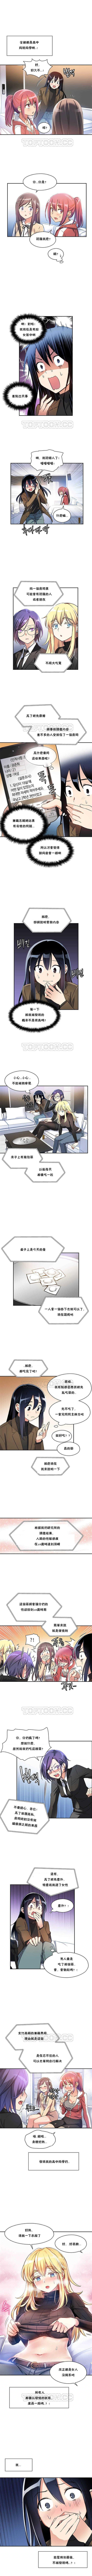 Nice 初恋豚鼠 1-30 中文翻译（更新中） Officesex - Page 7